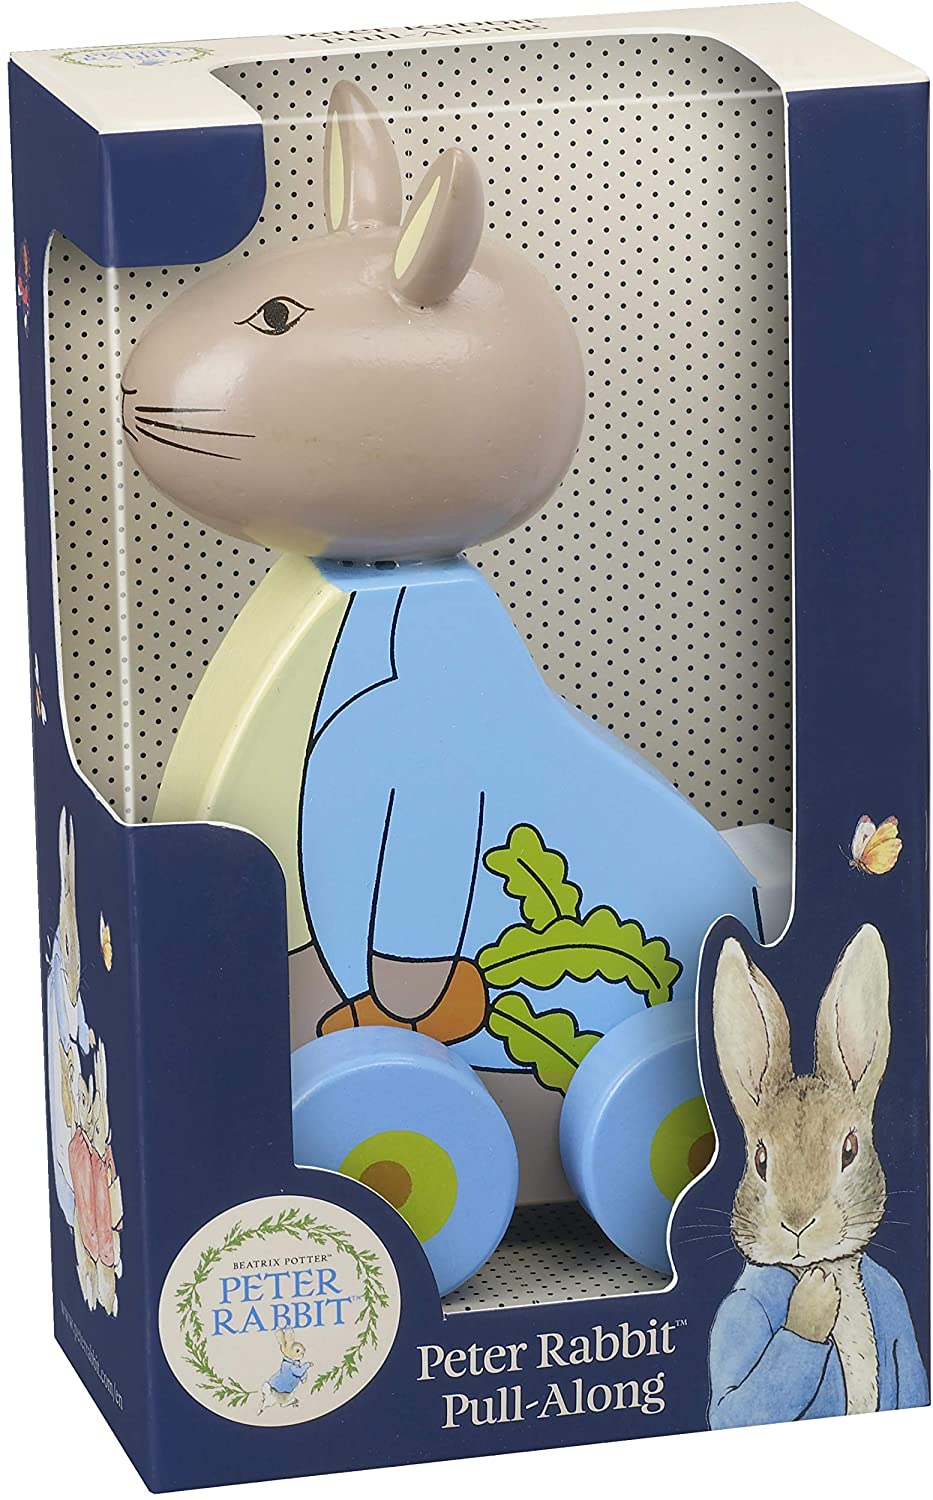 Orange Tree Toys Rabbit Peter Rabbit & Friends Pull Along, Skin